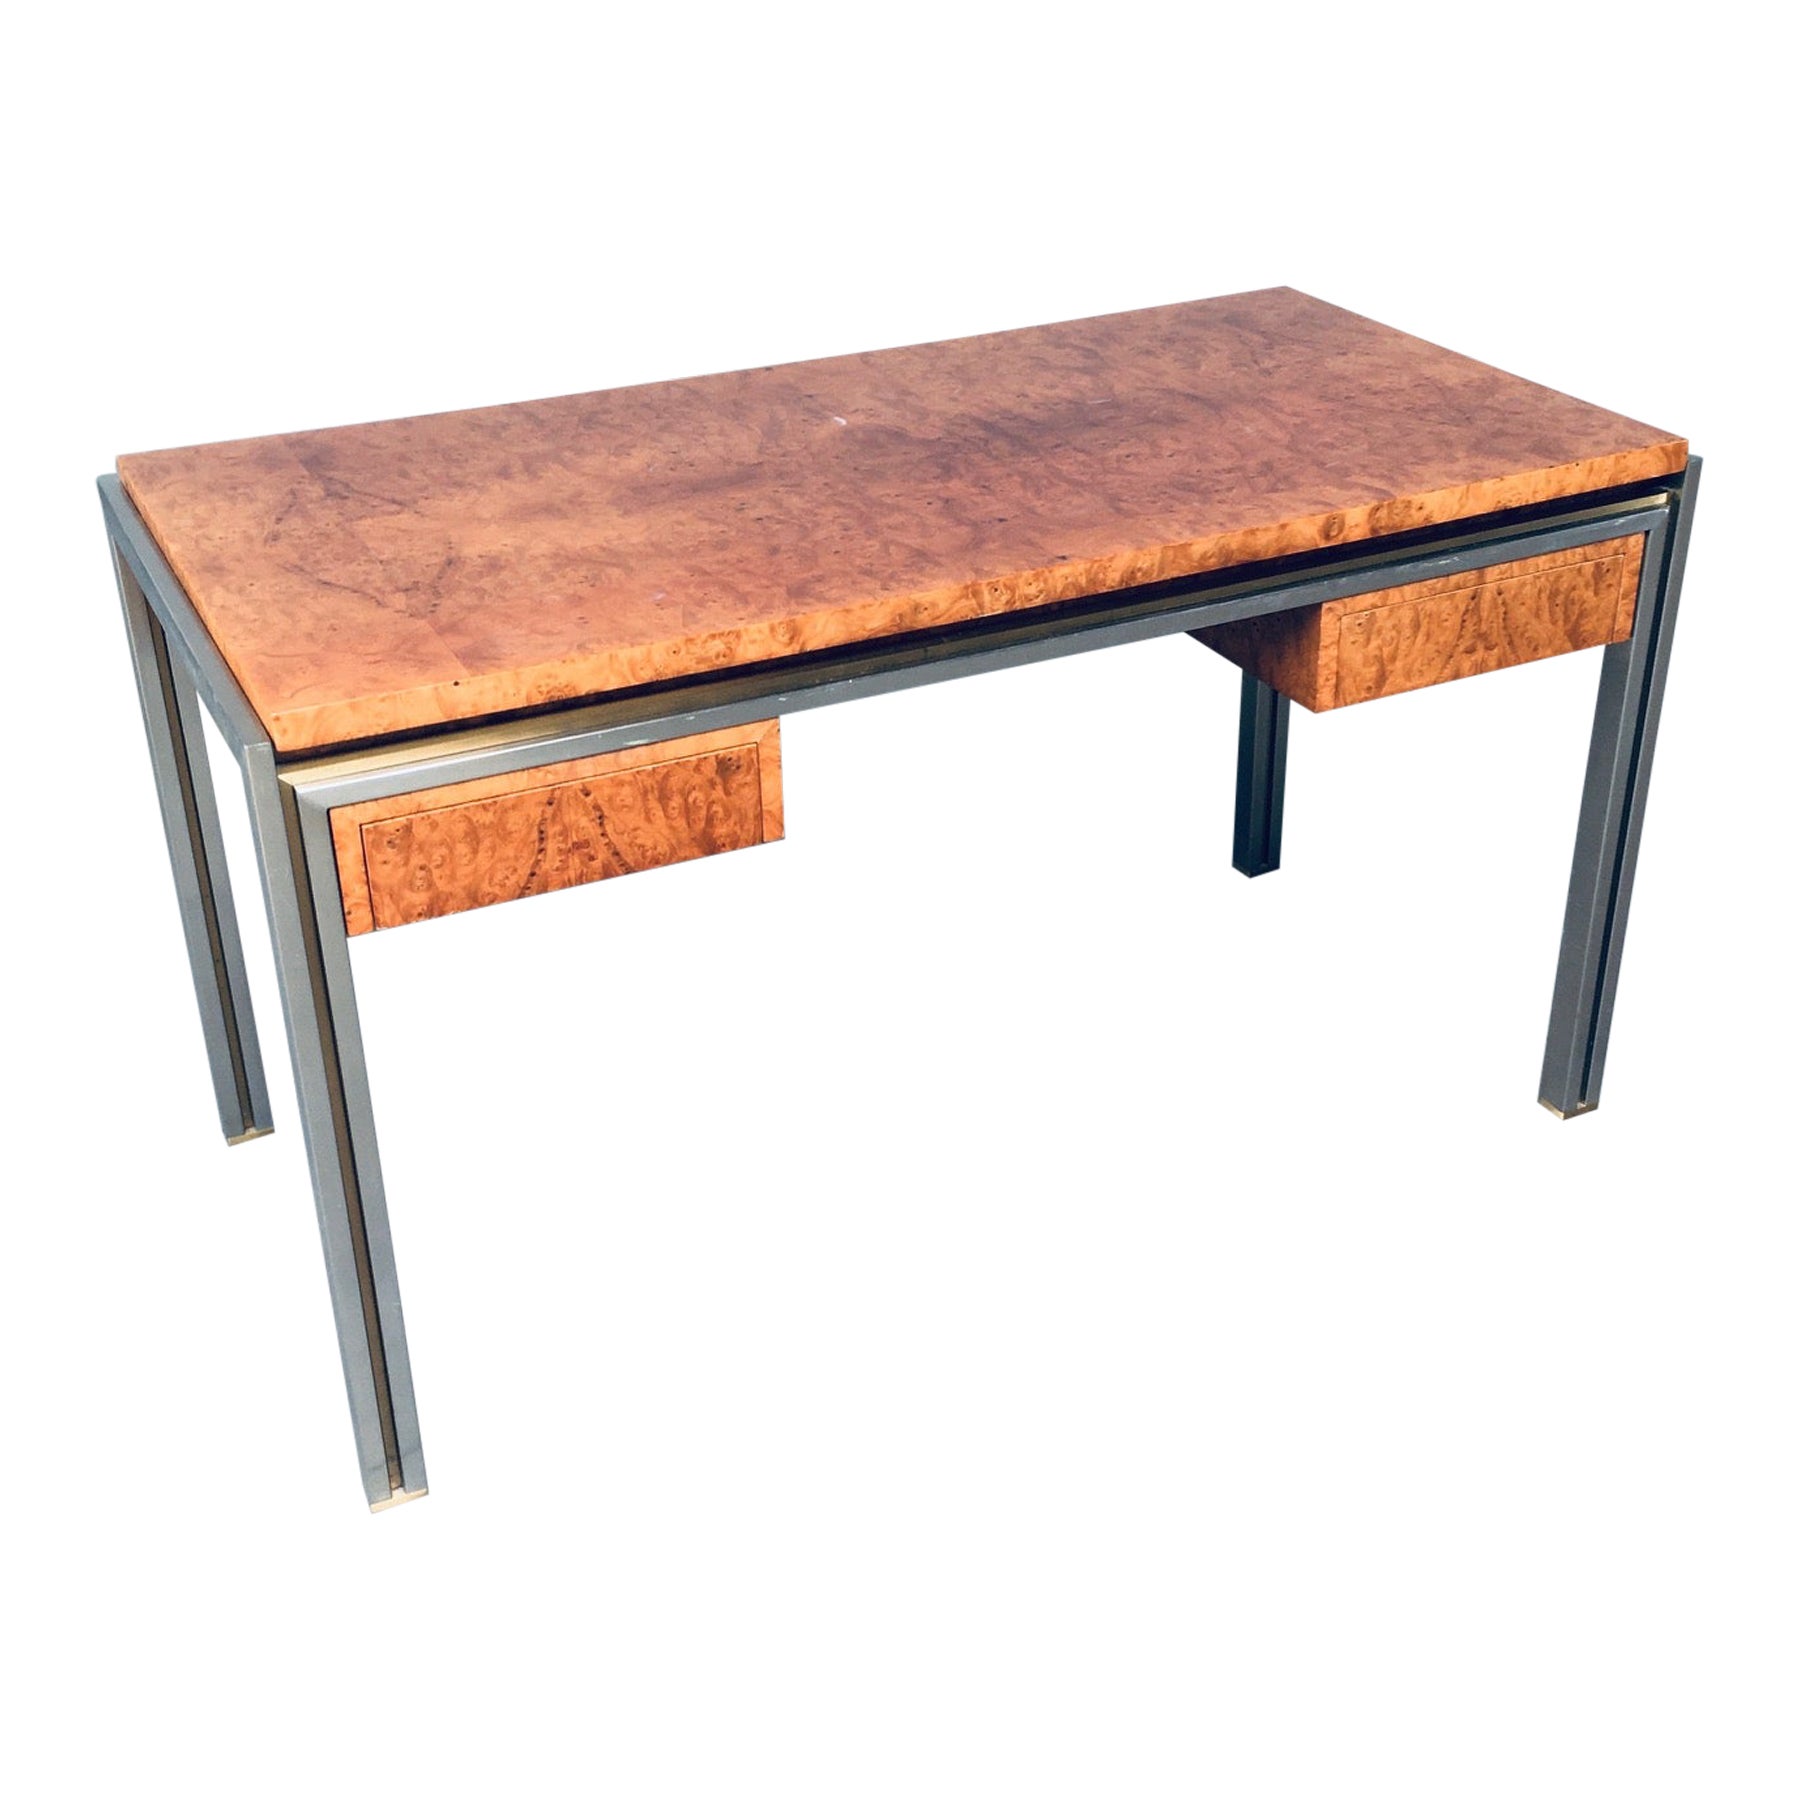 Postmodern Design in Style of Milo Baughman Burl Wood Desk, 1970's For Sale